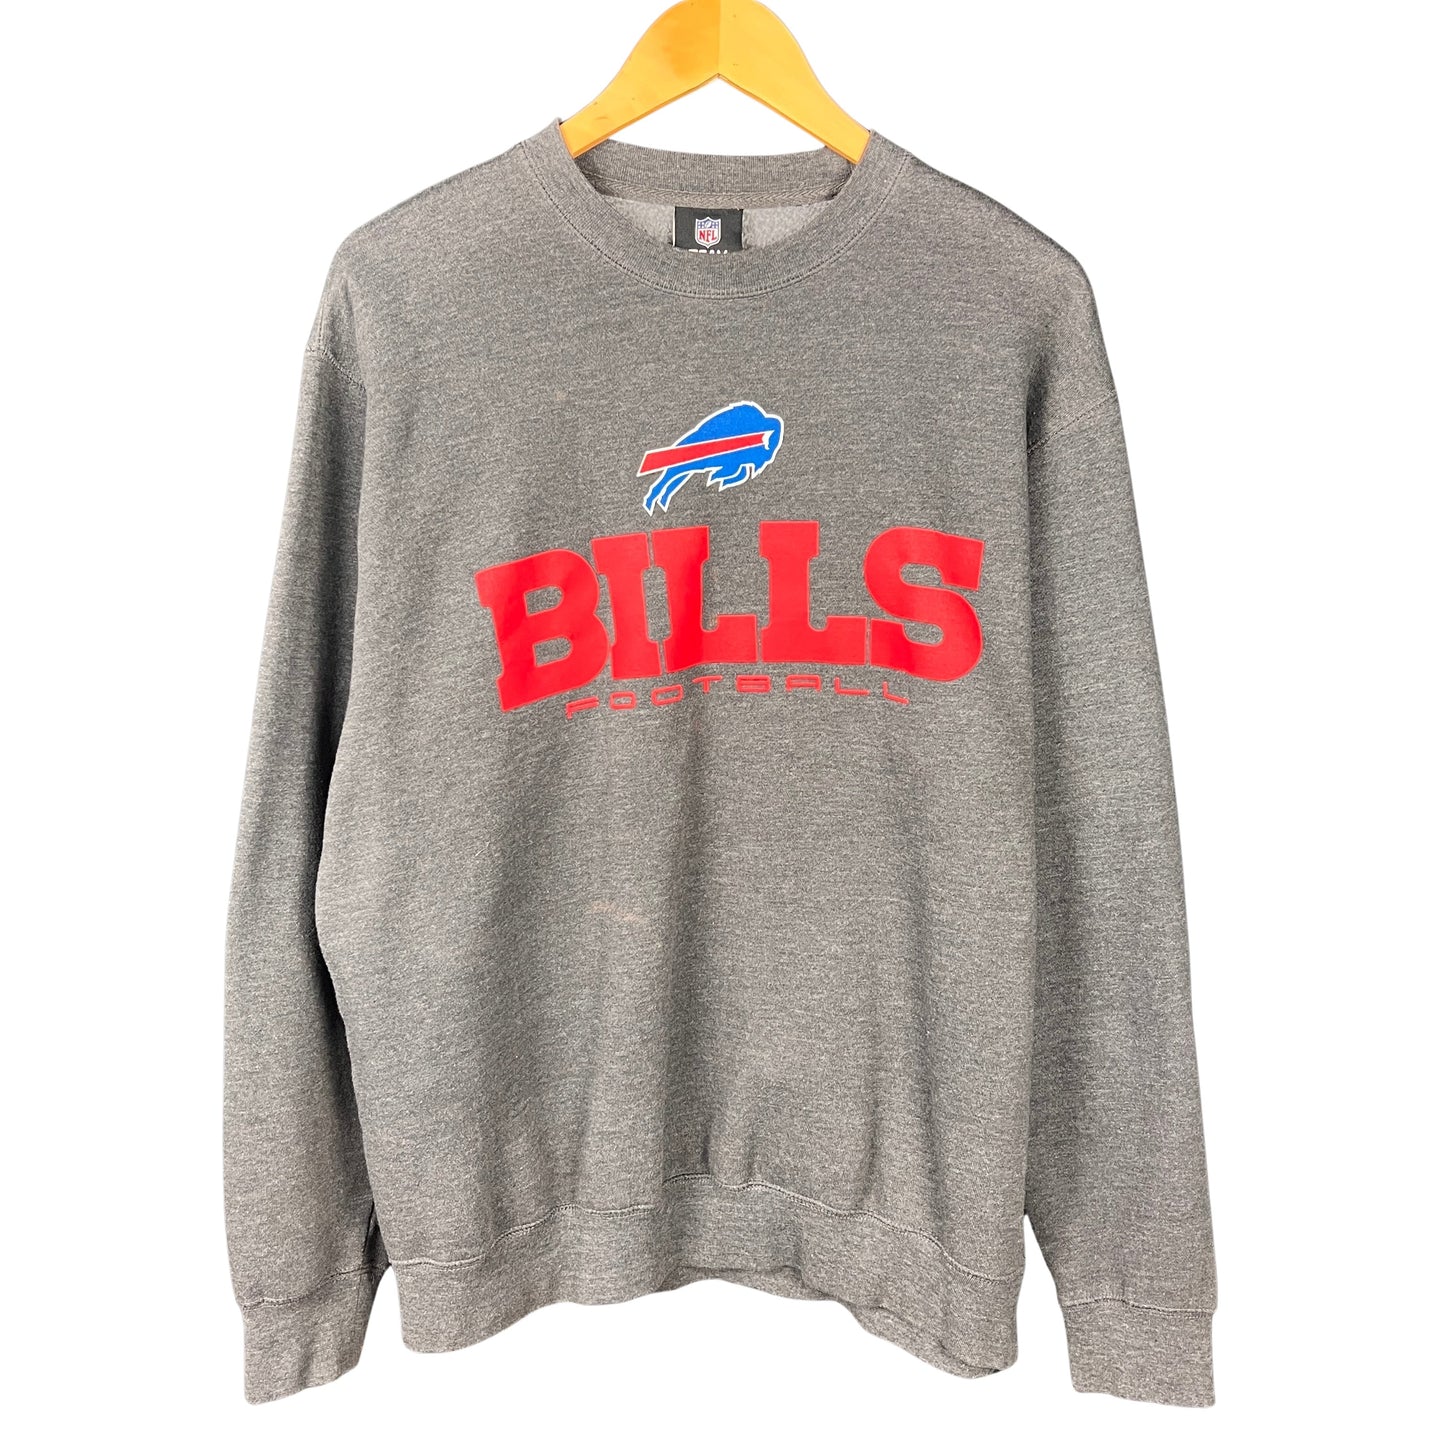 Vintage Buffalo Bills Crewneck Sweatshirt Size Large